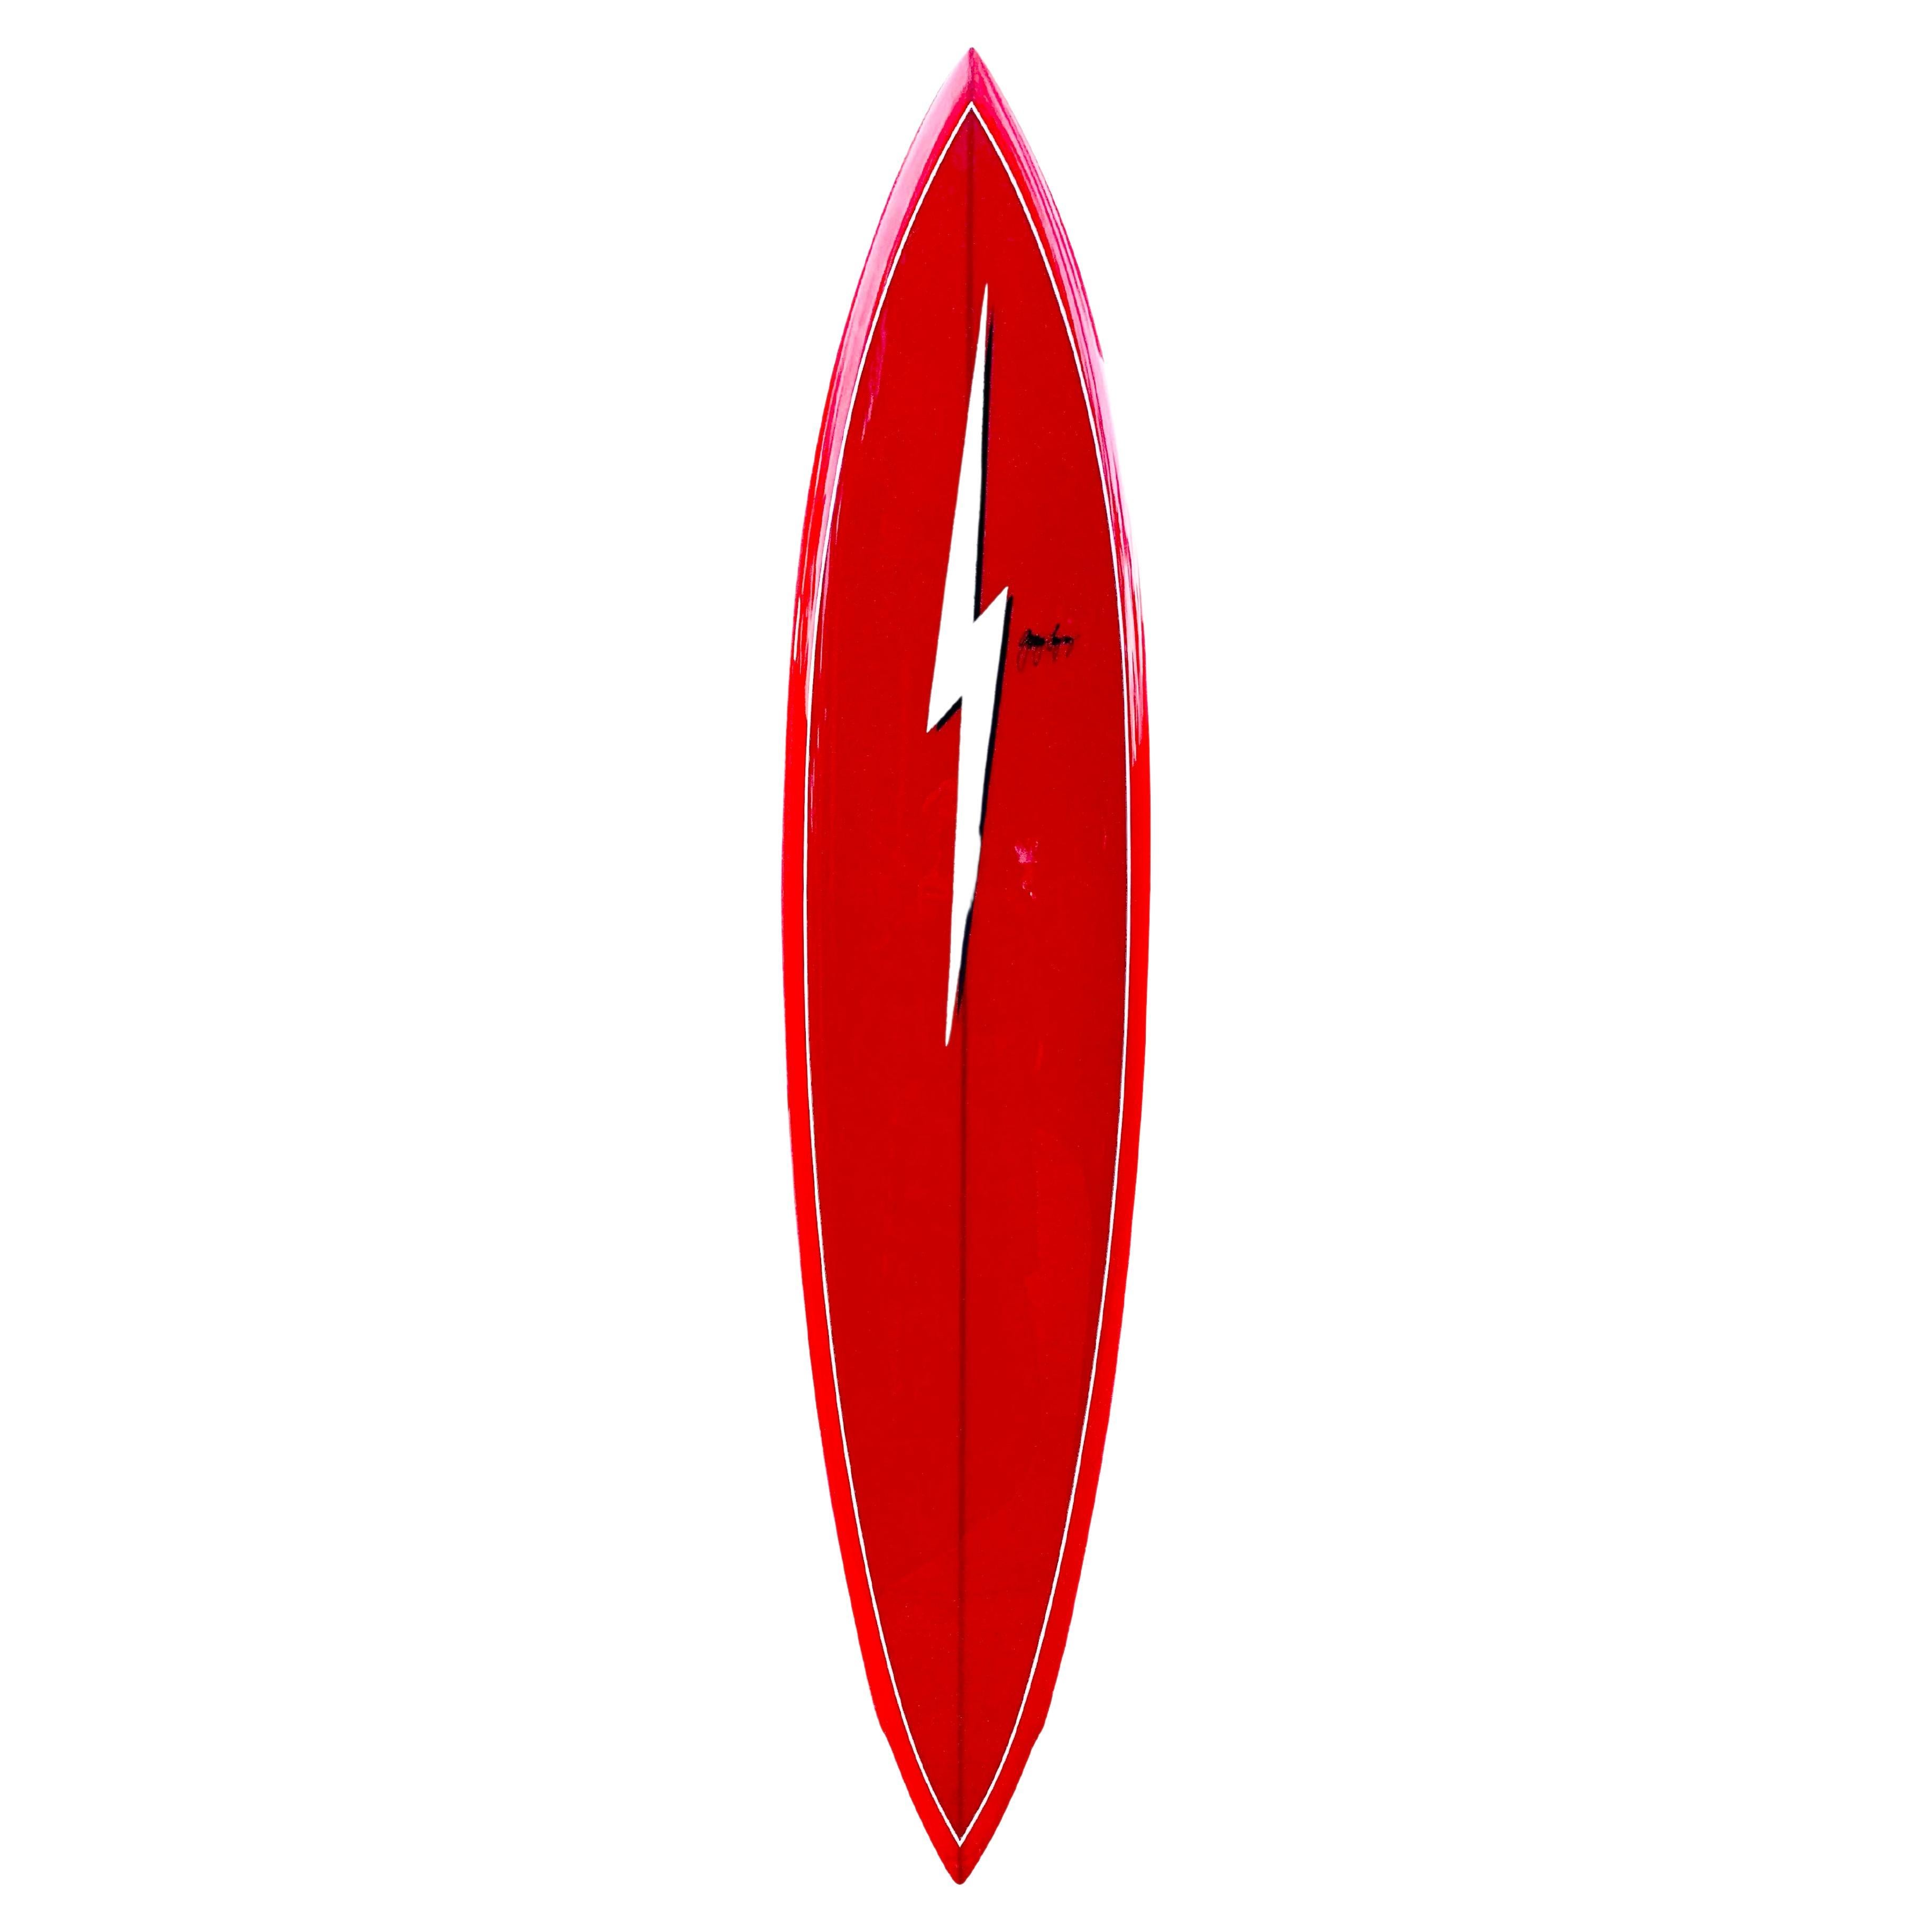 Gerry Lopez Lightning Bolt “Big Wednesday” Surfboard